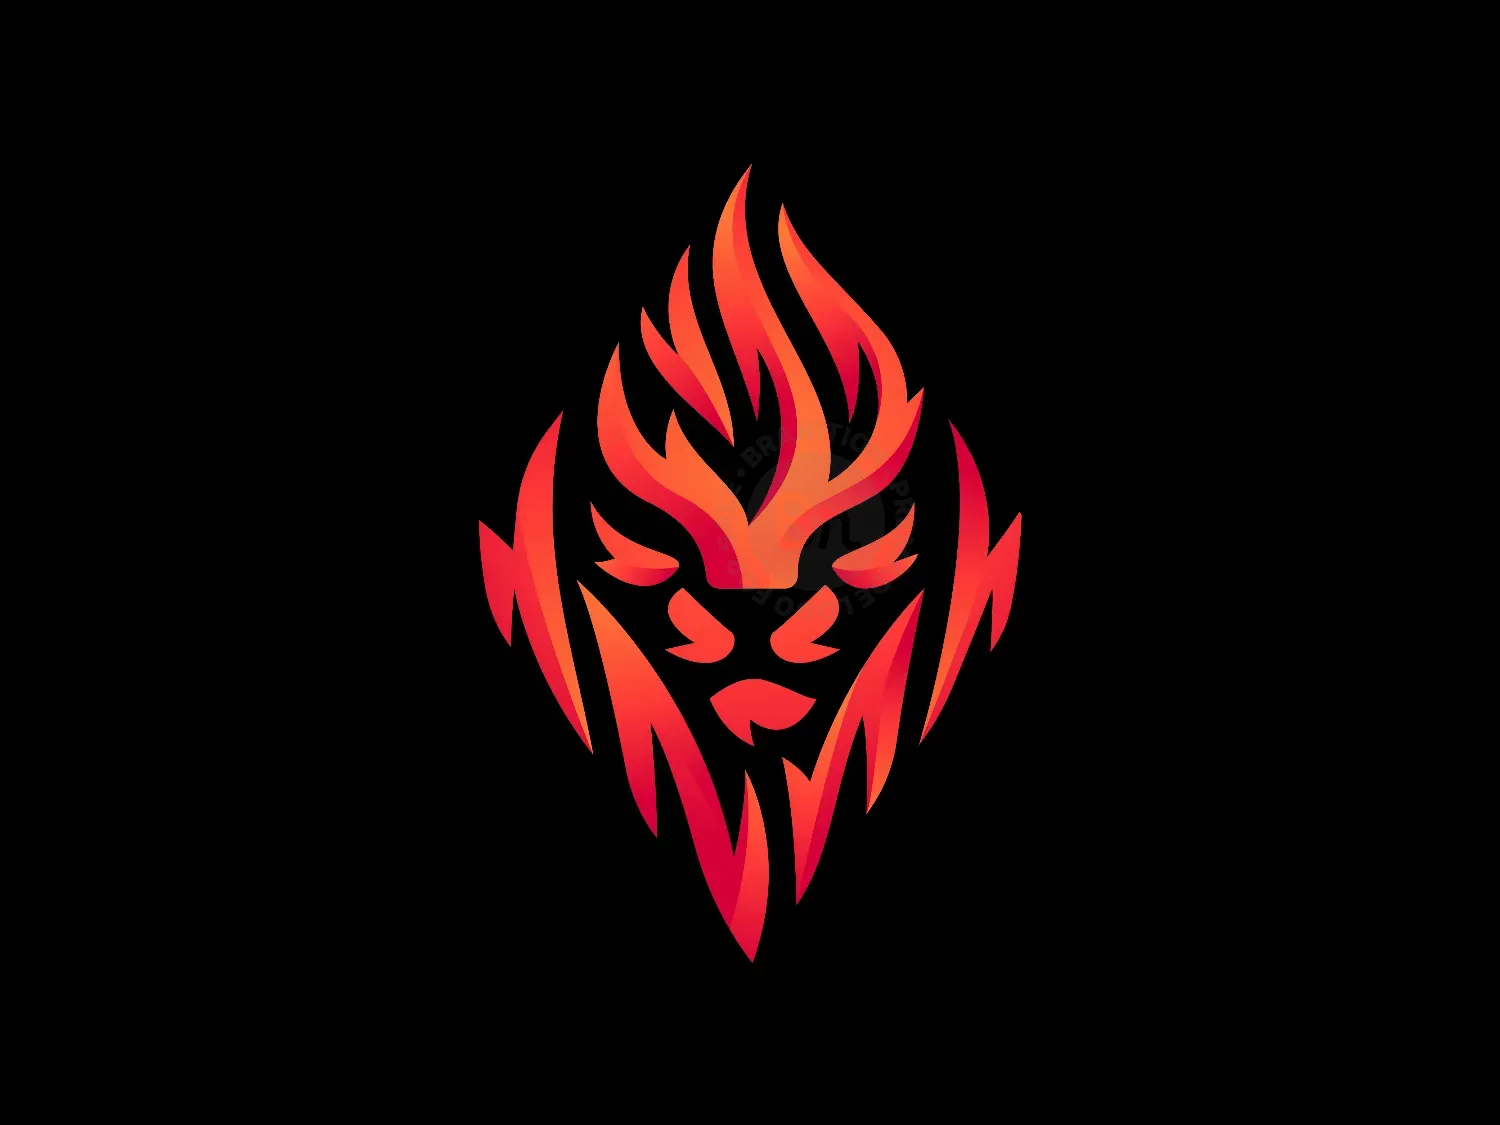 Futuristic Lion Fire Logo